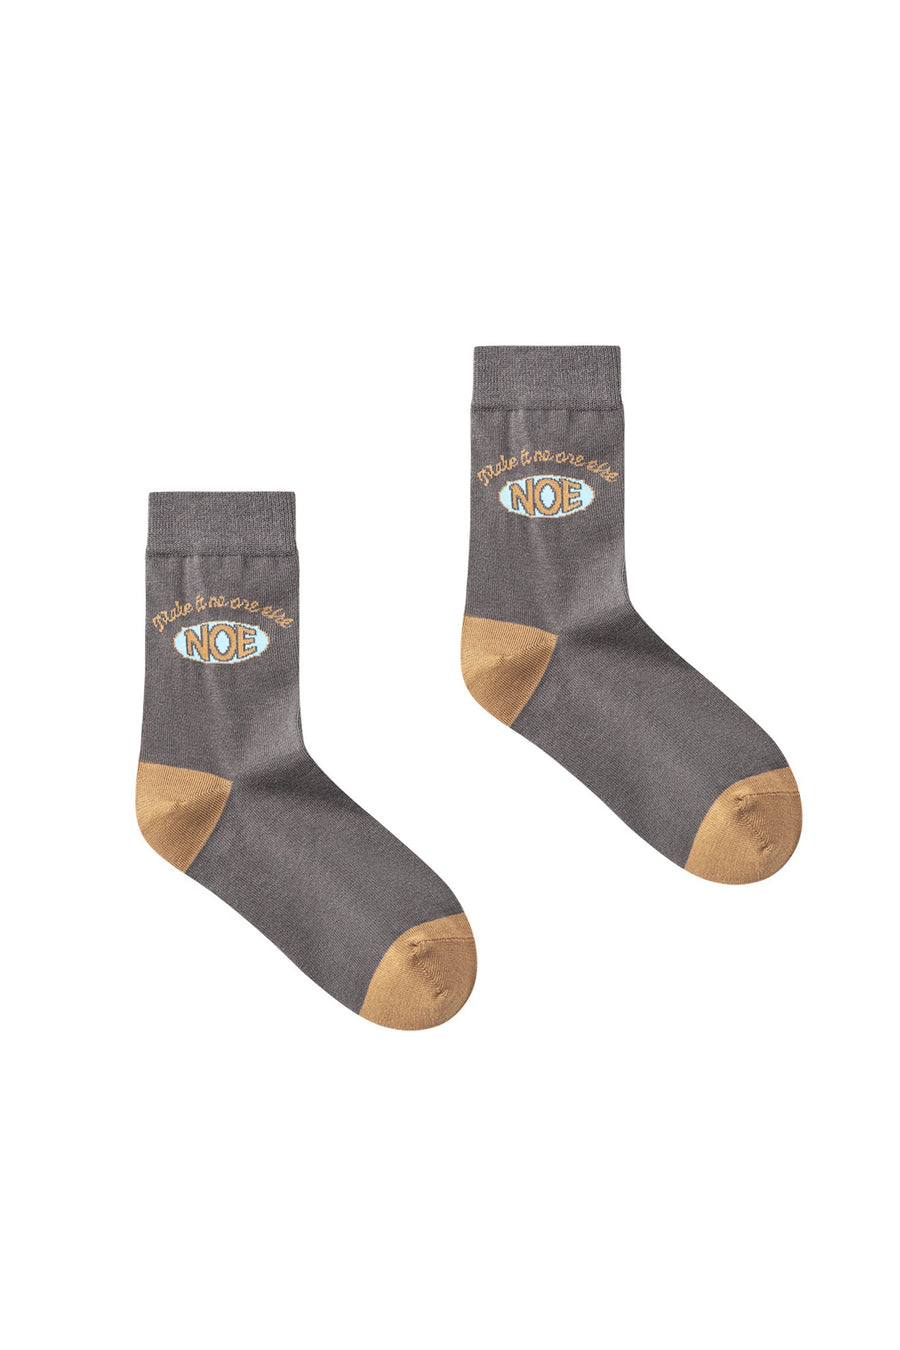 CHUU Noe Knit Socks